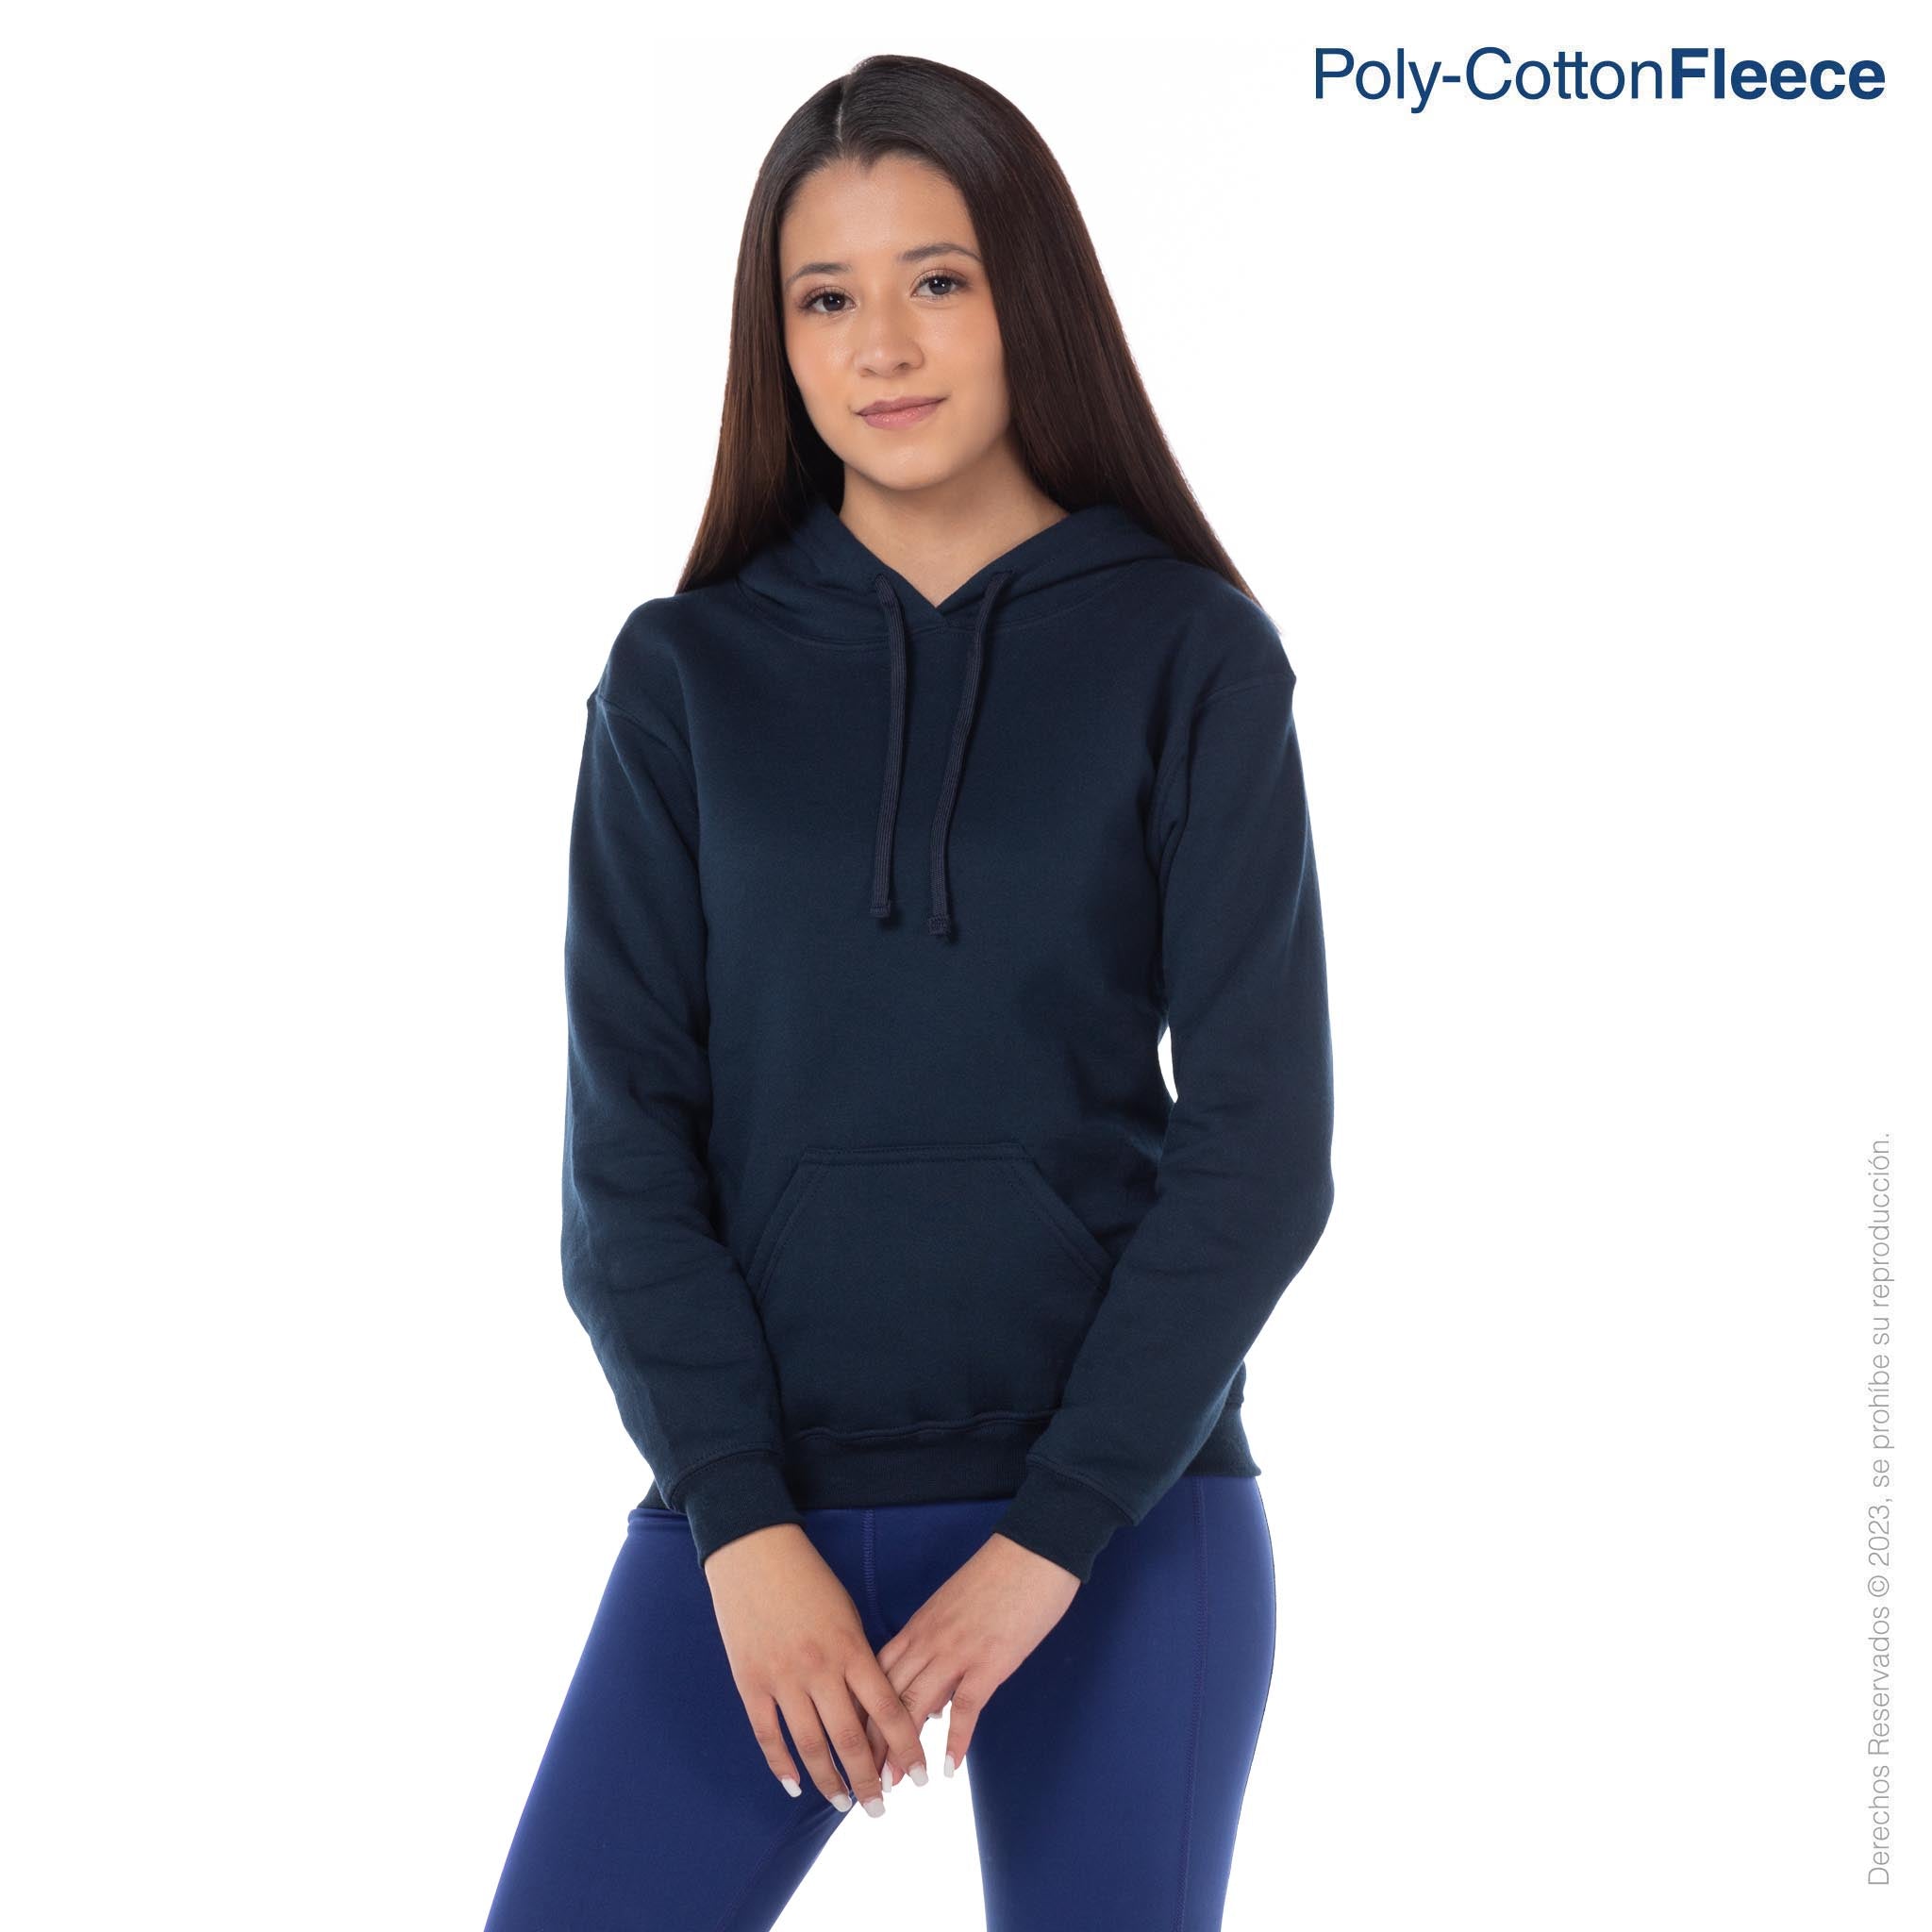 Youth’s Unisex Hooded Sweatshirt With Kangaroo Pocket (Navy)